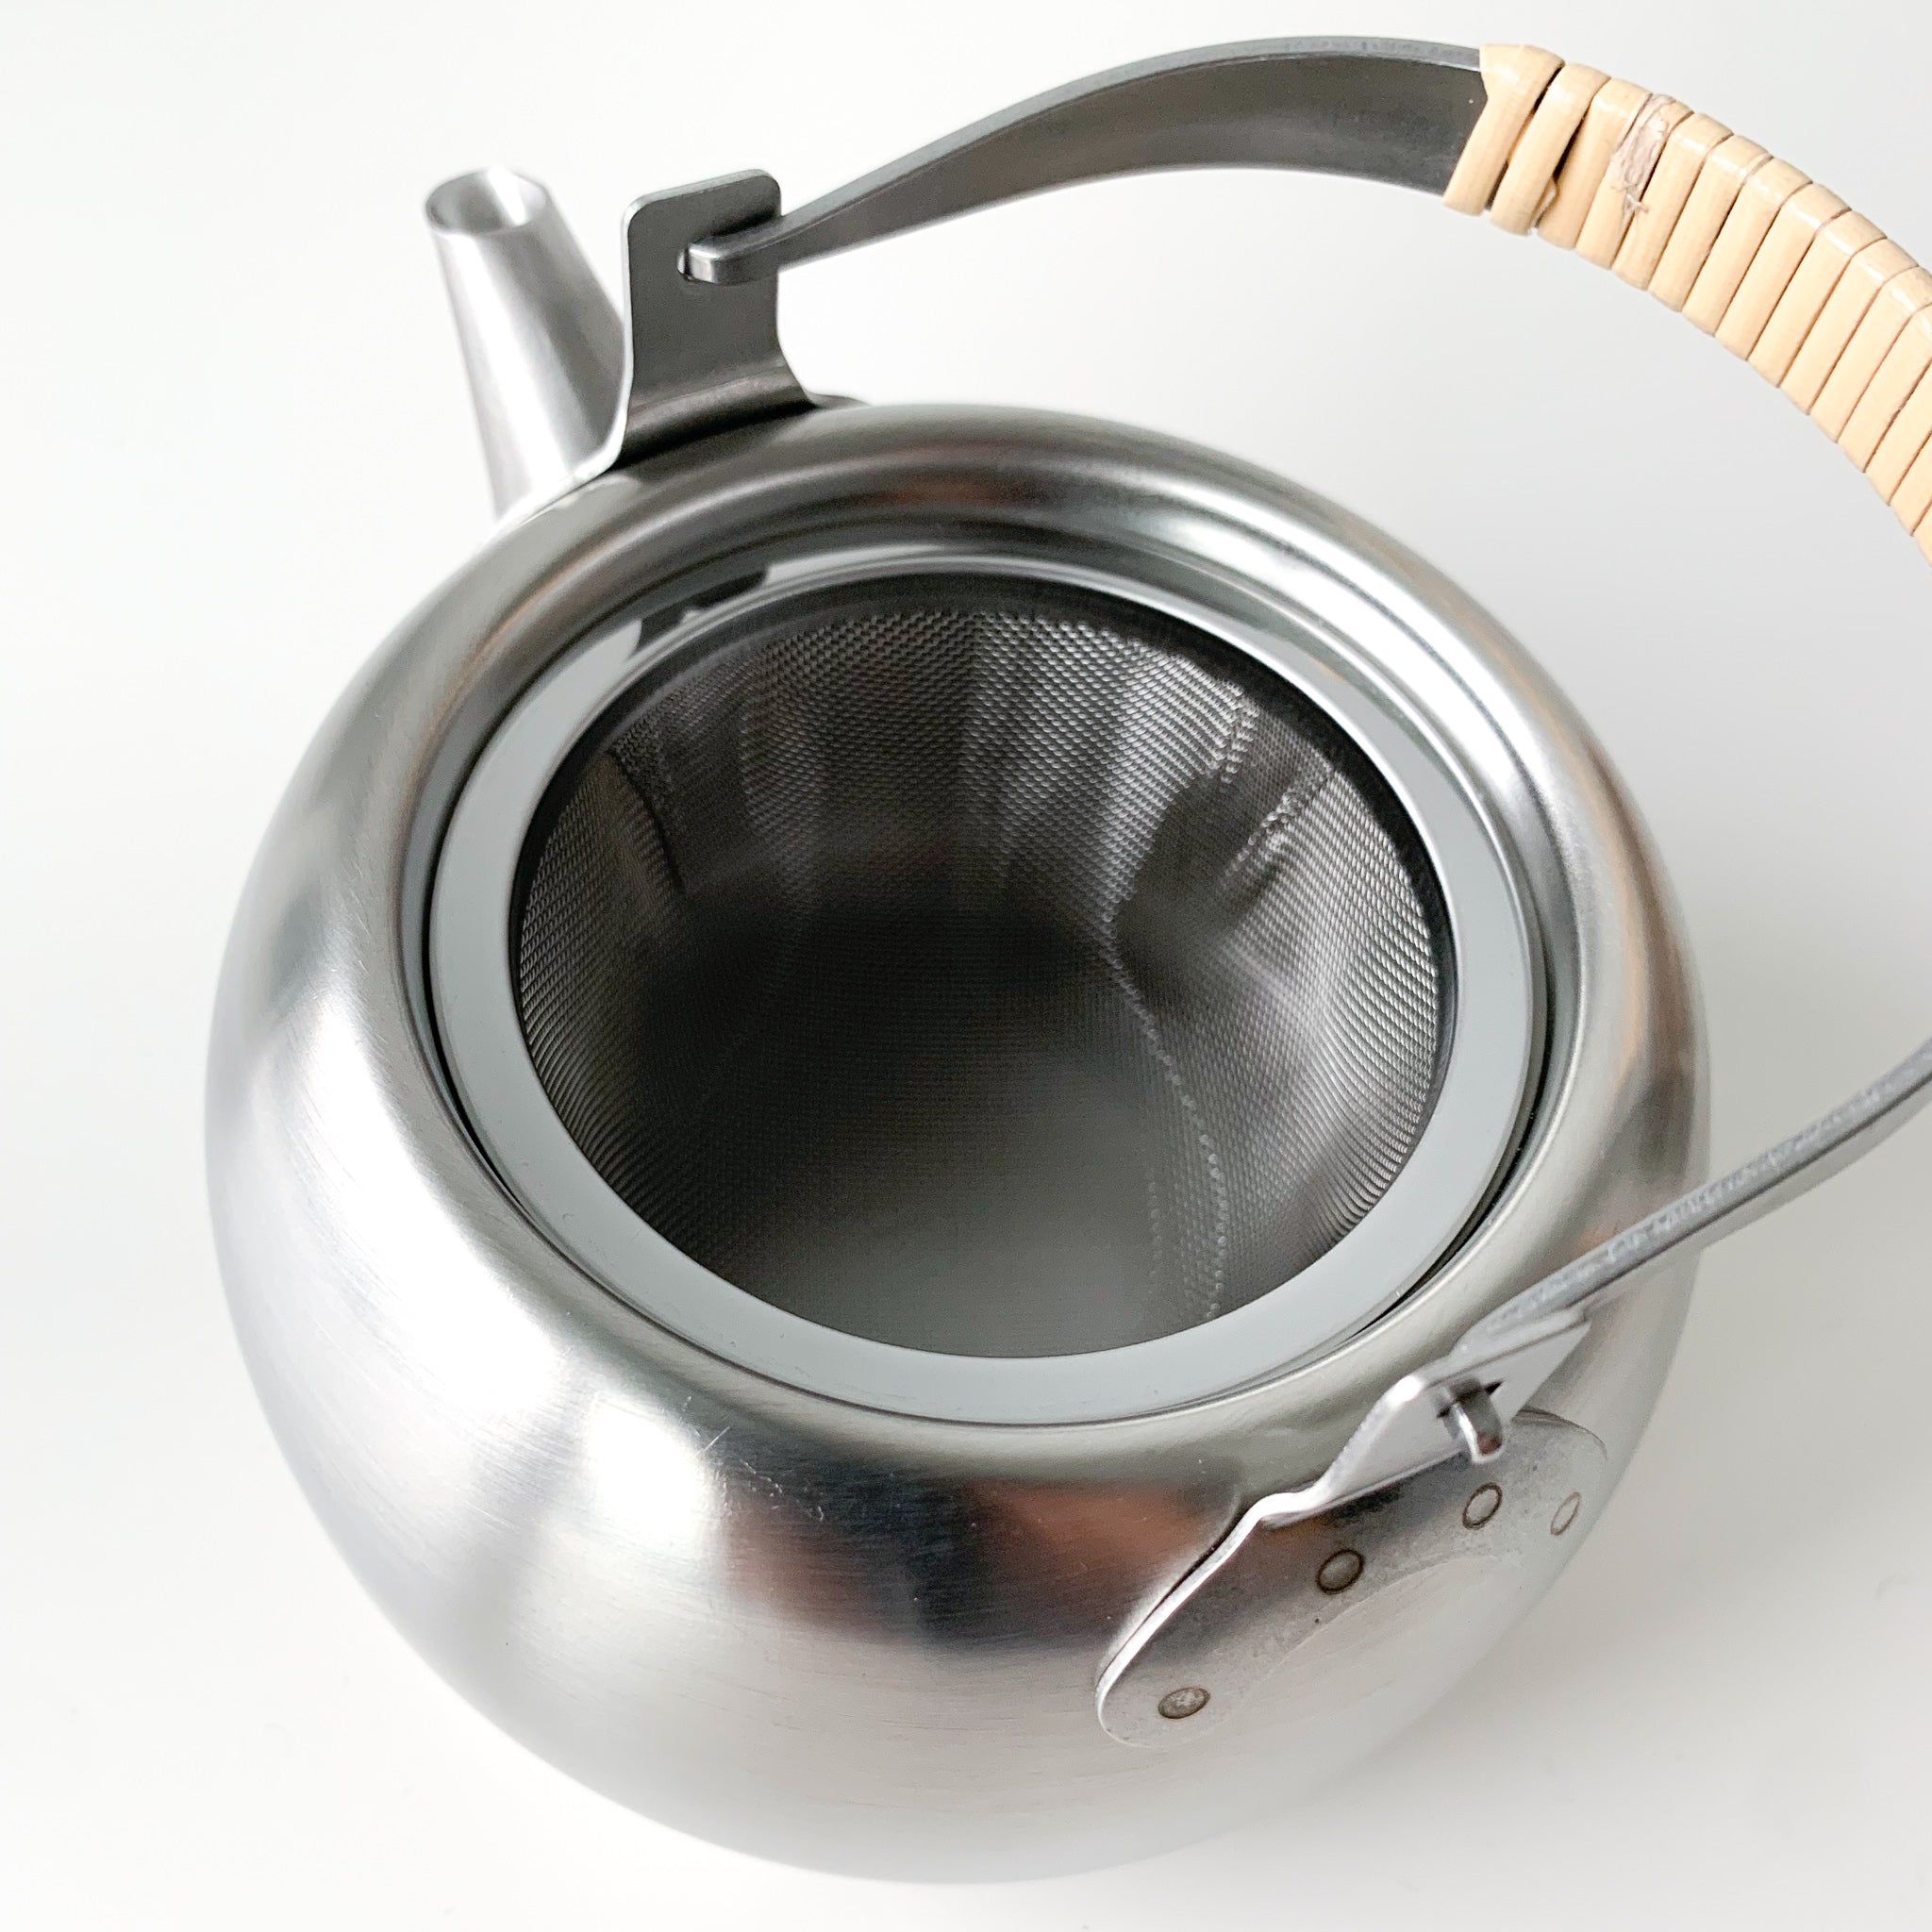 Yoshikawa SJ1023 Whistling Kettle, Made in Japan, 0.6 gal (2.5 L), Silver,  Stainless Steel